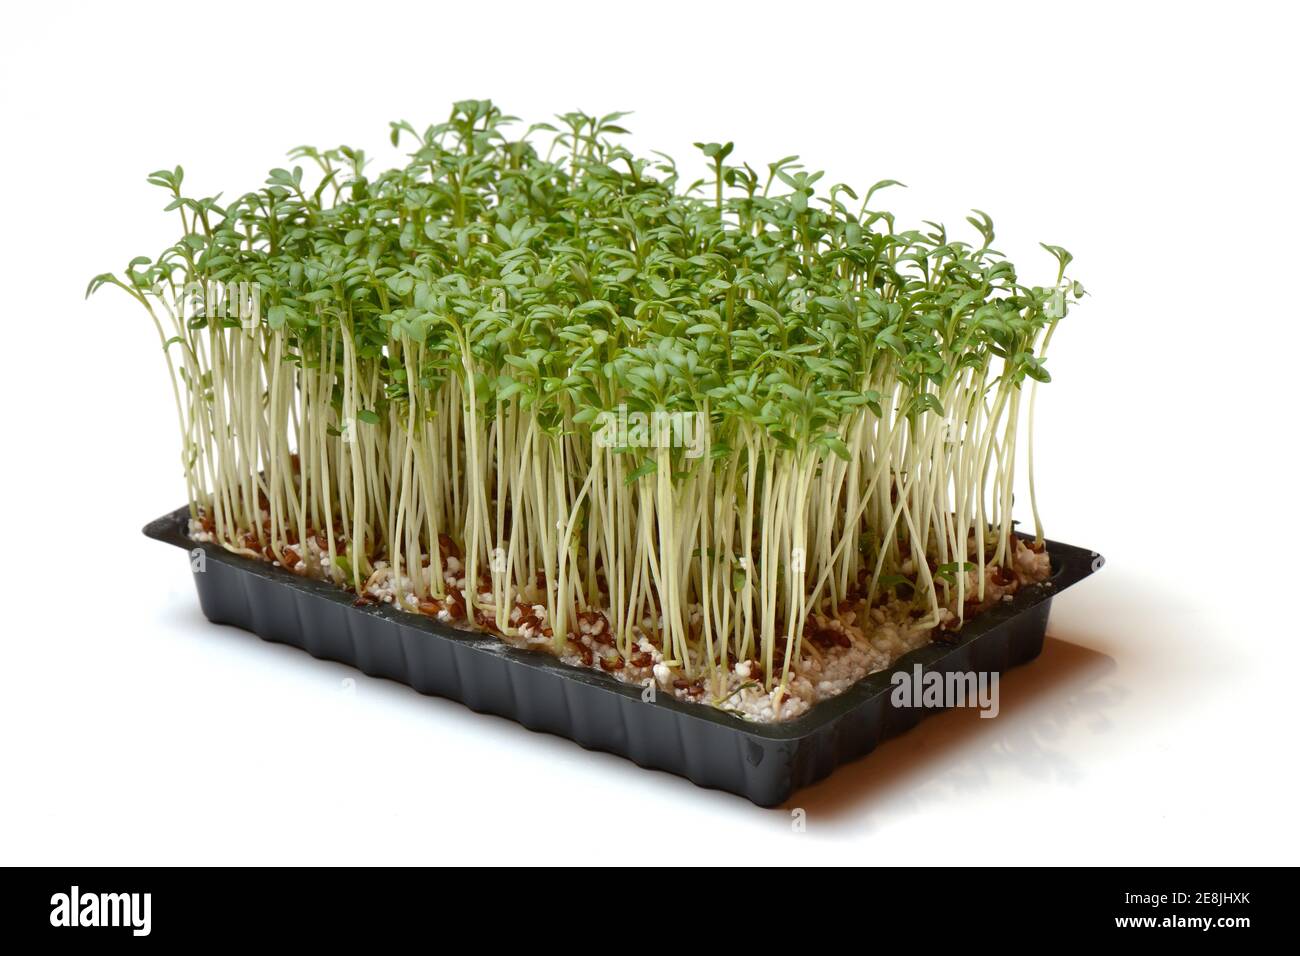 Garden cress (Lepidium sativum) cress sprouts Stock Photo